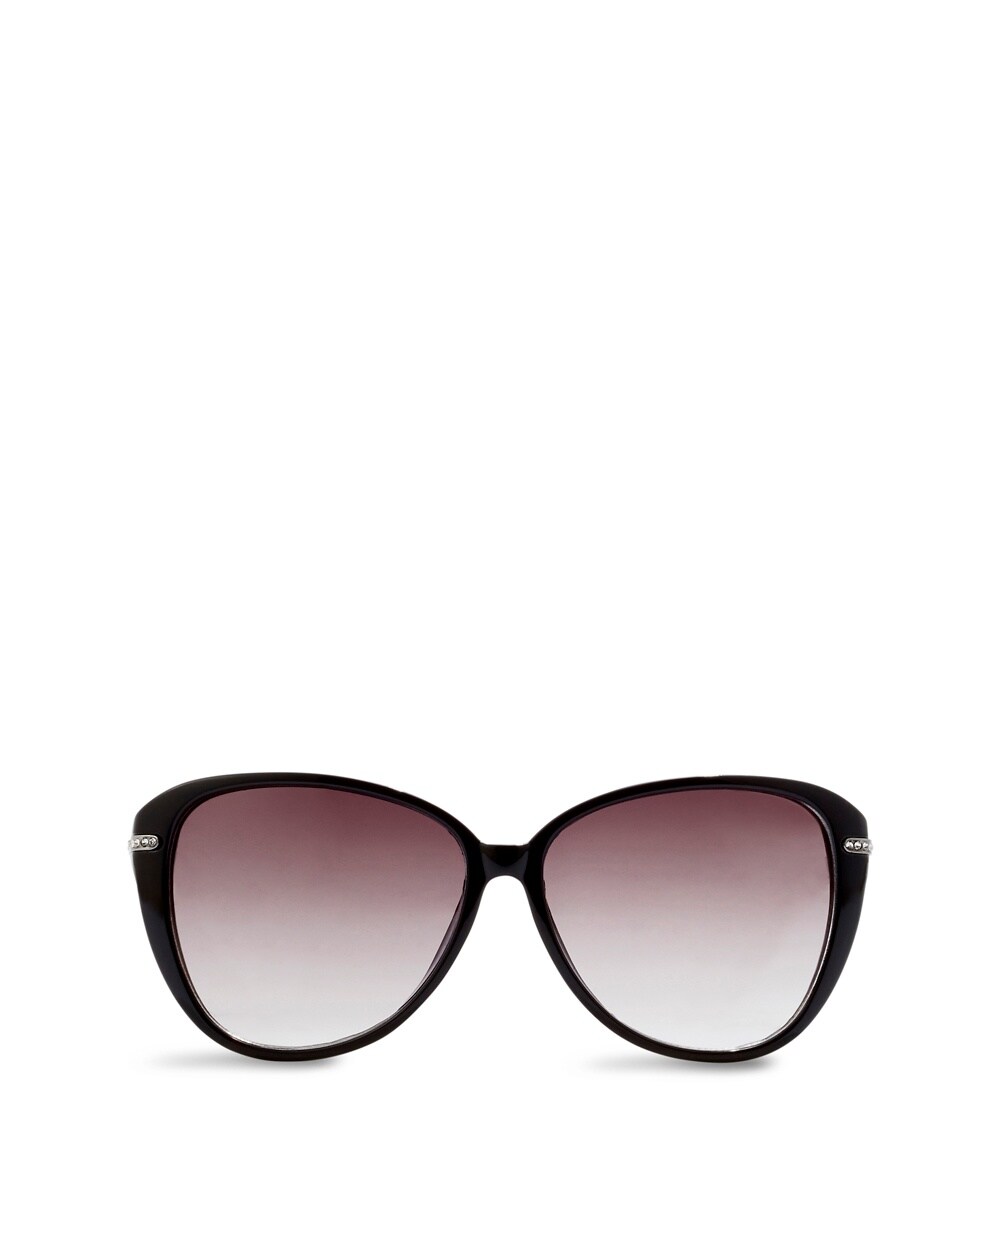 Lana Zebra-Print Sunglasses